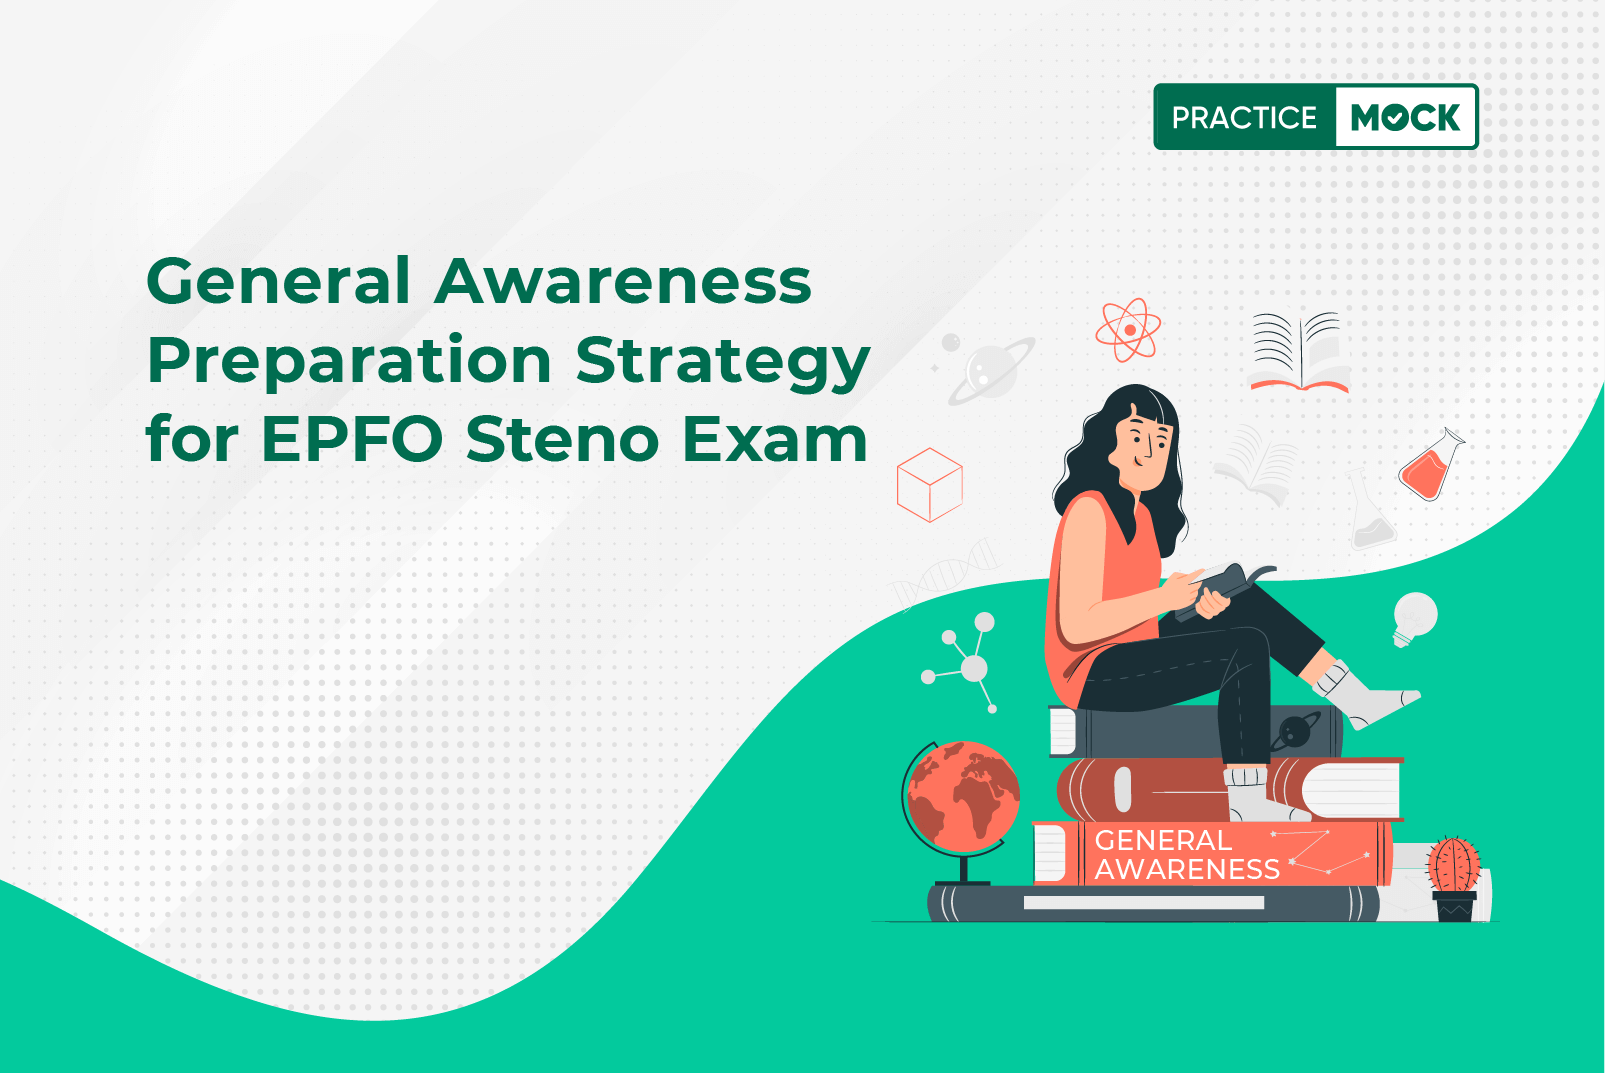 General Awareness Preparation Strategy for EPFO Steno Exam